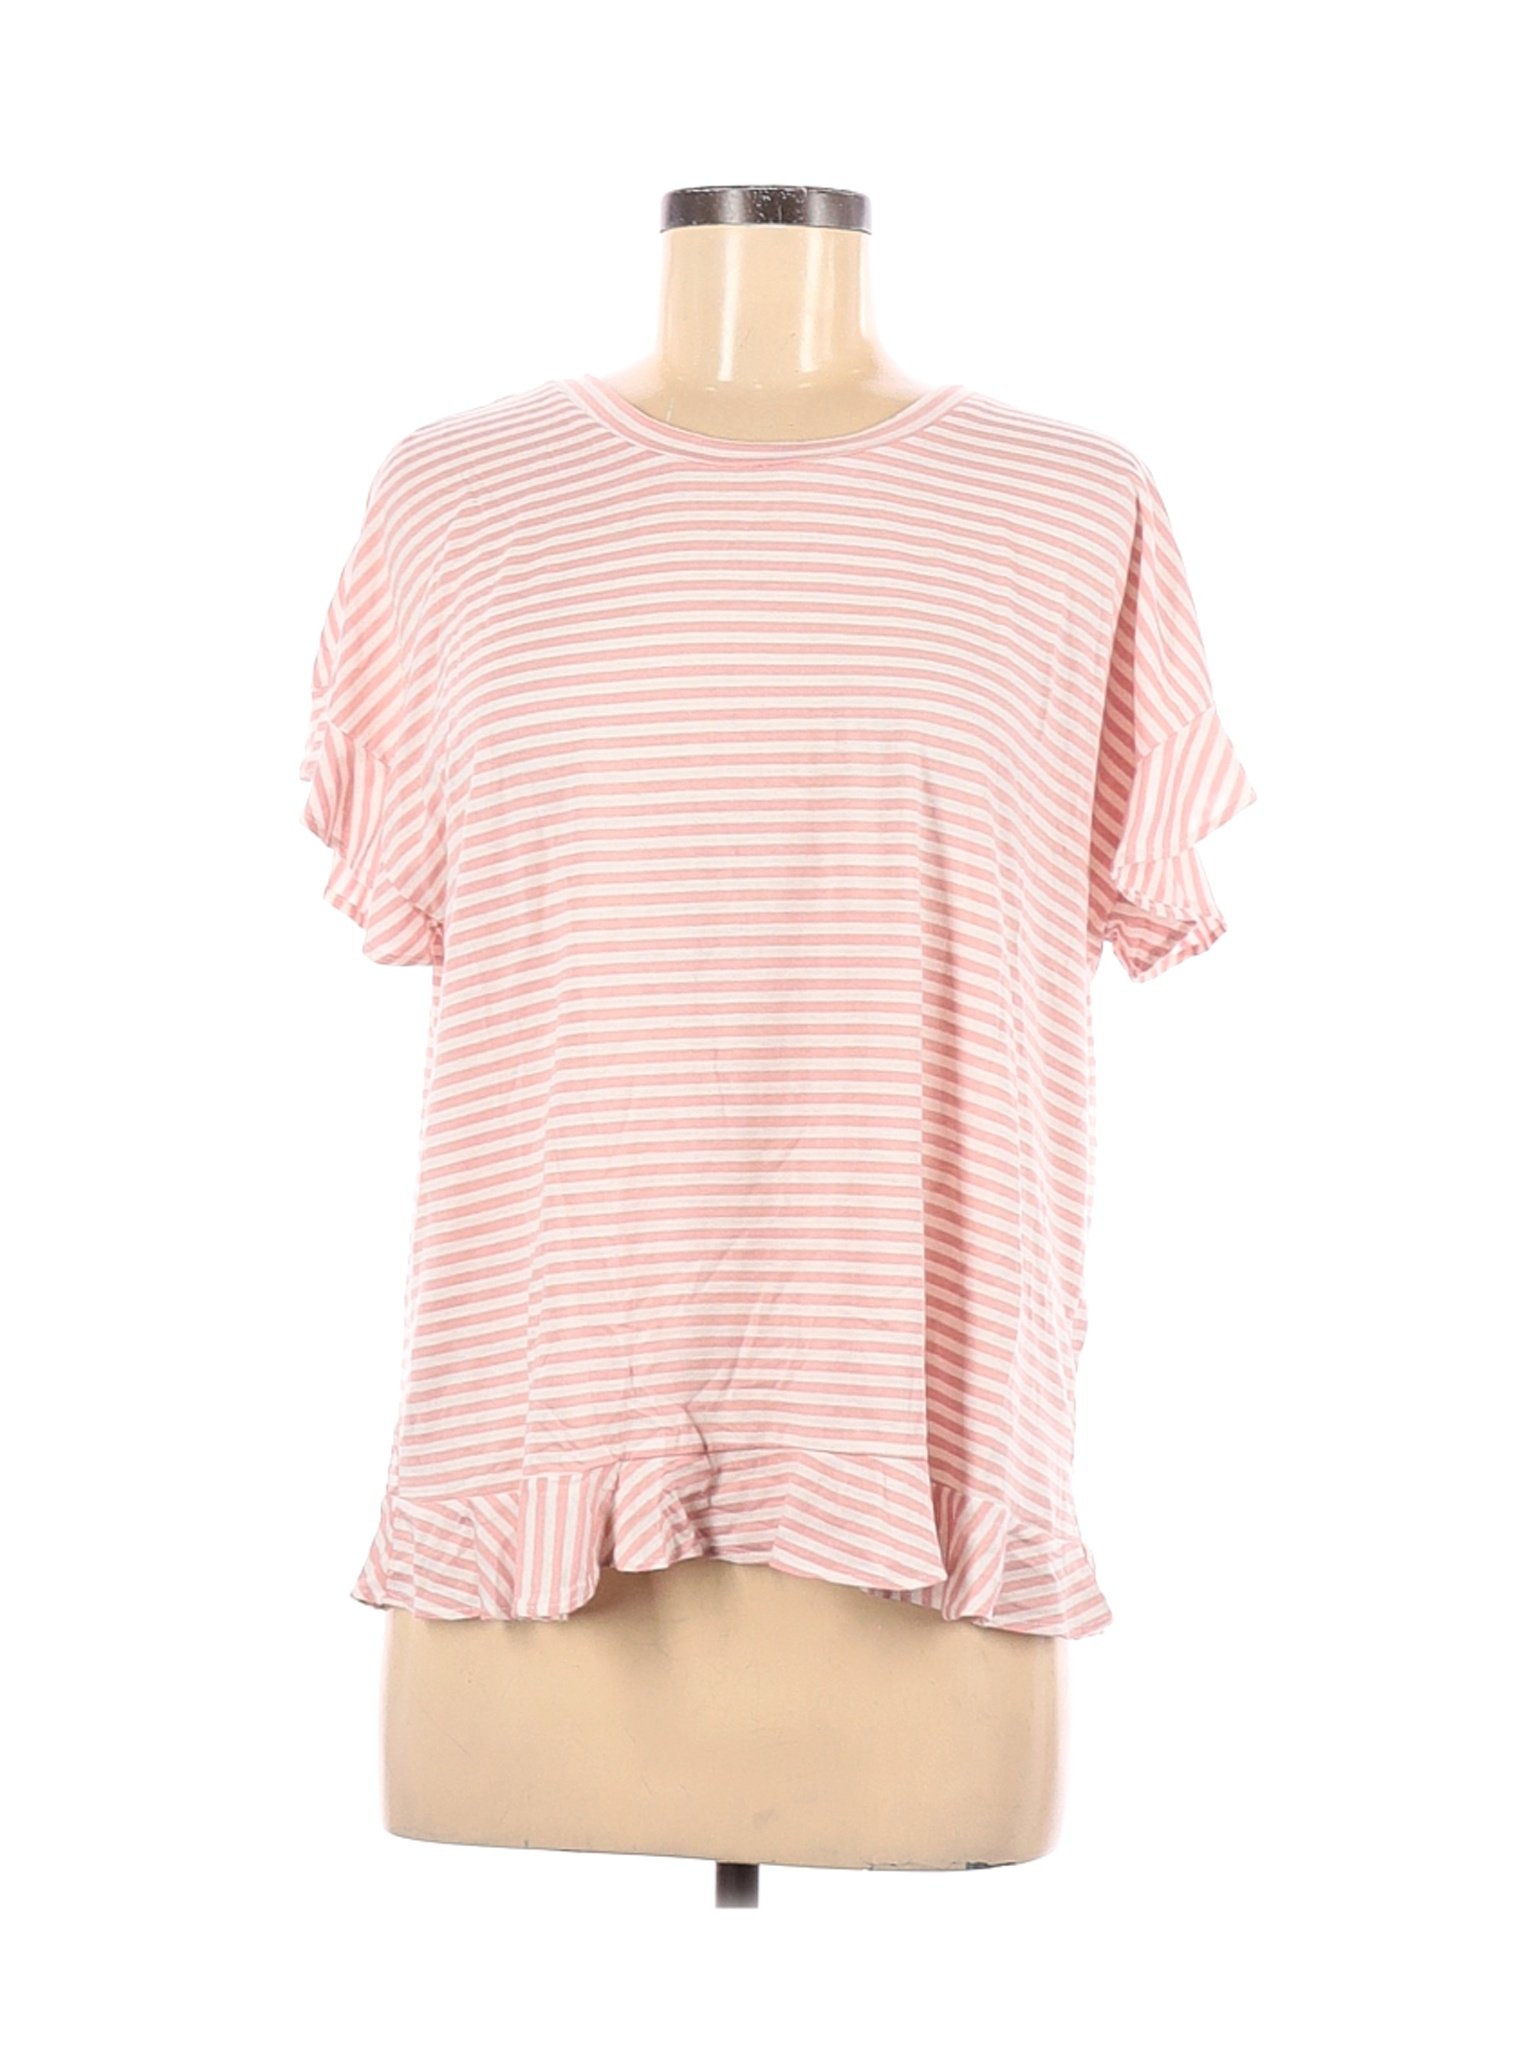 Dreamers Women Pink Short Sleeve Top M | eBay